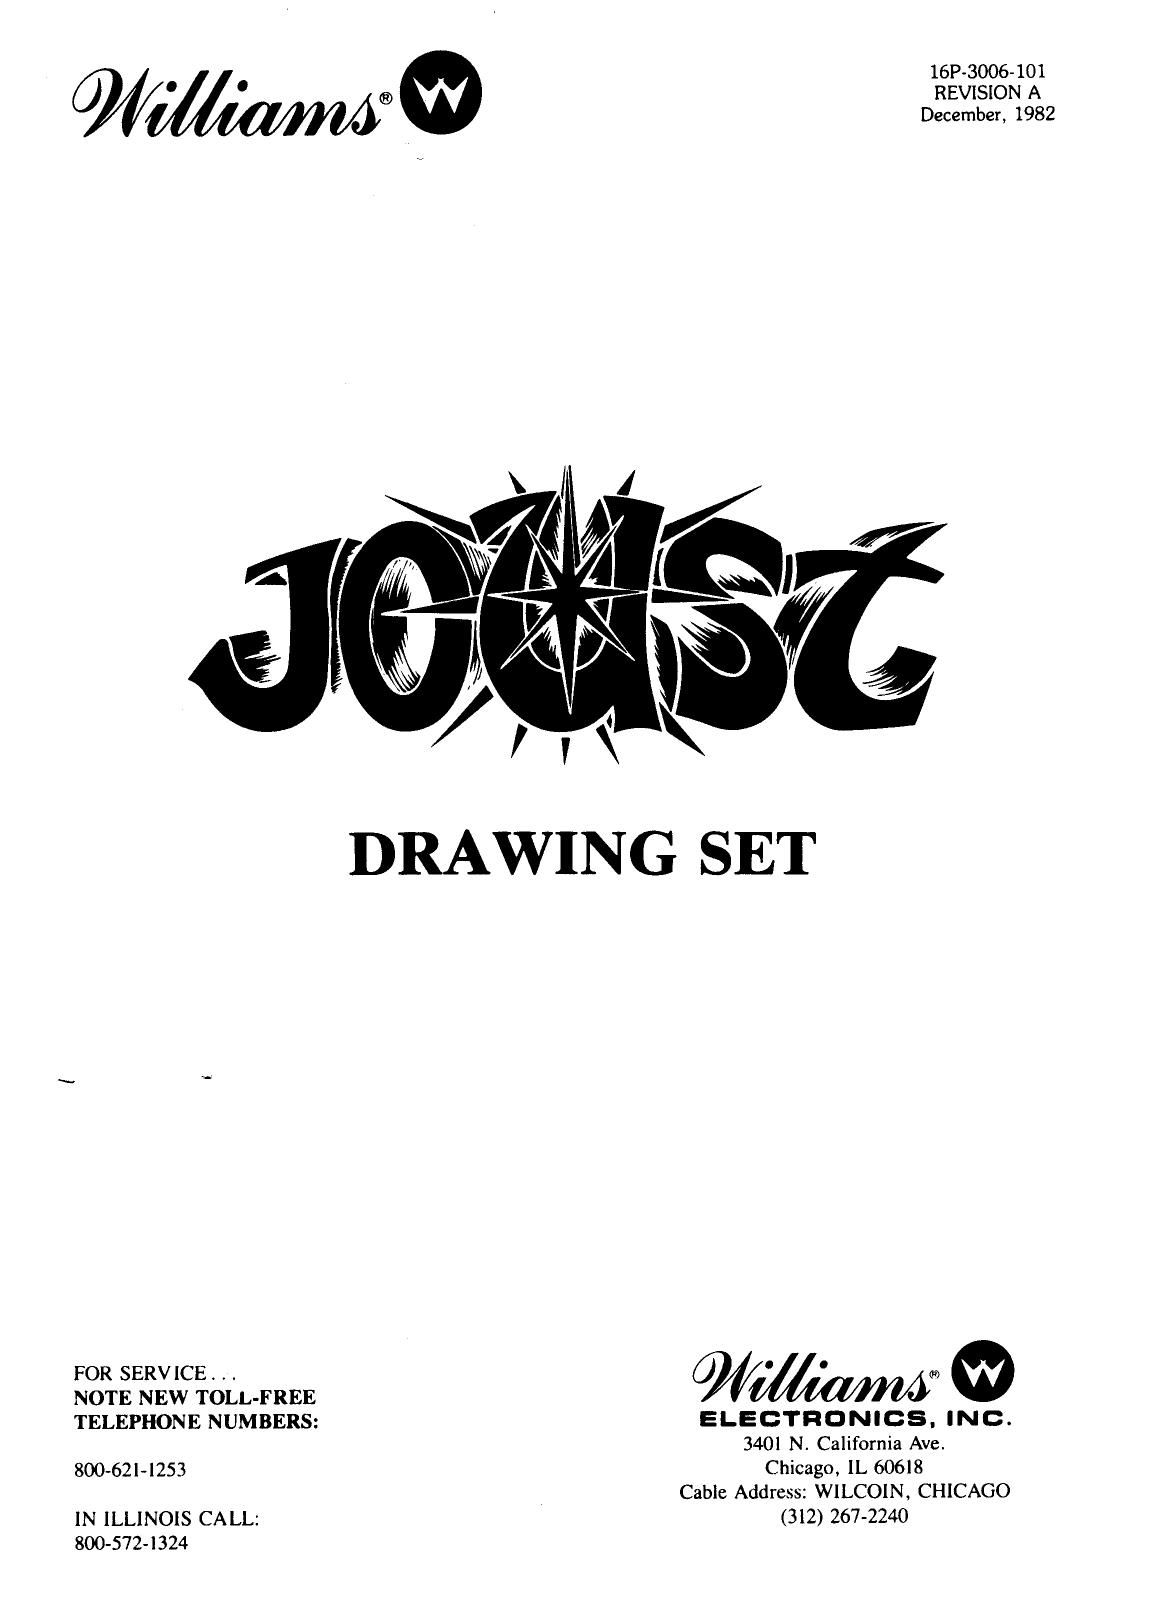 Joust (Drawing Set) (U)